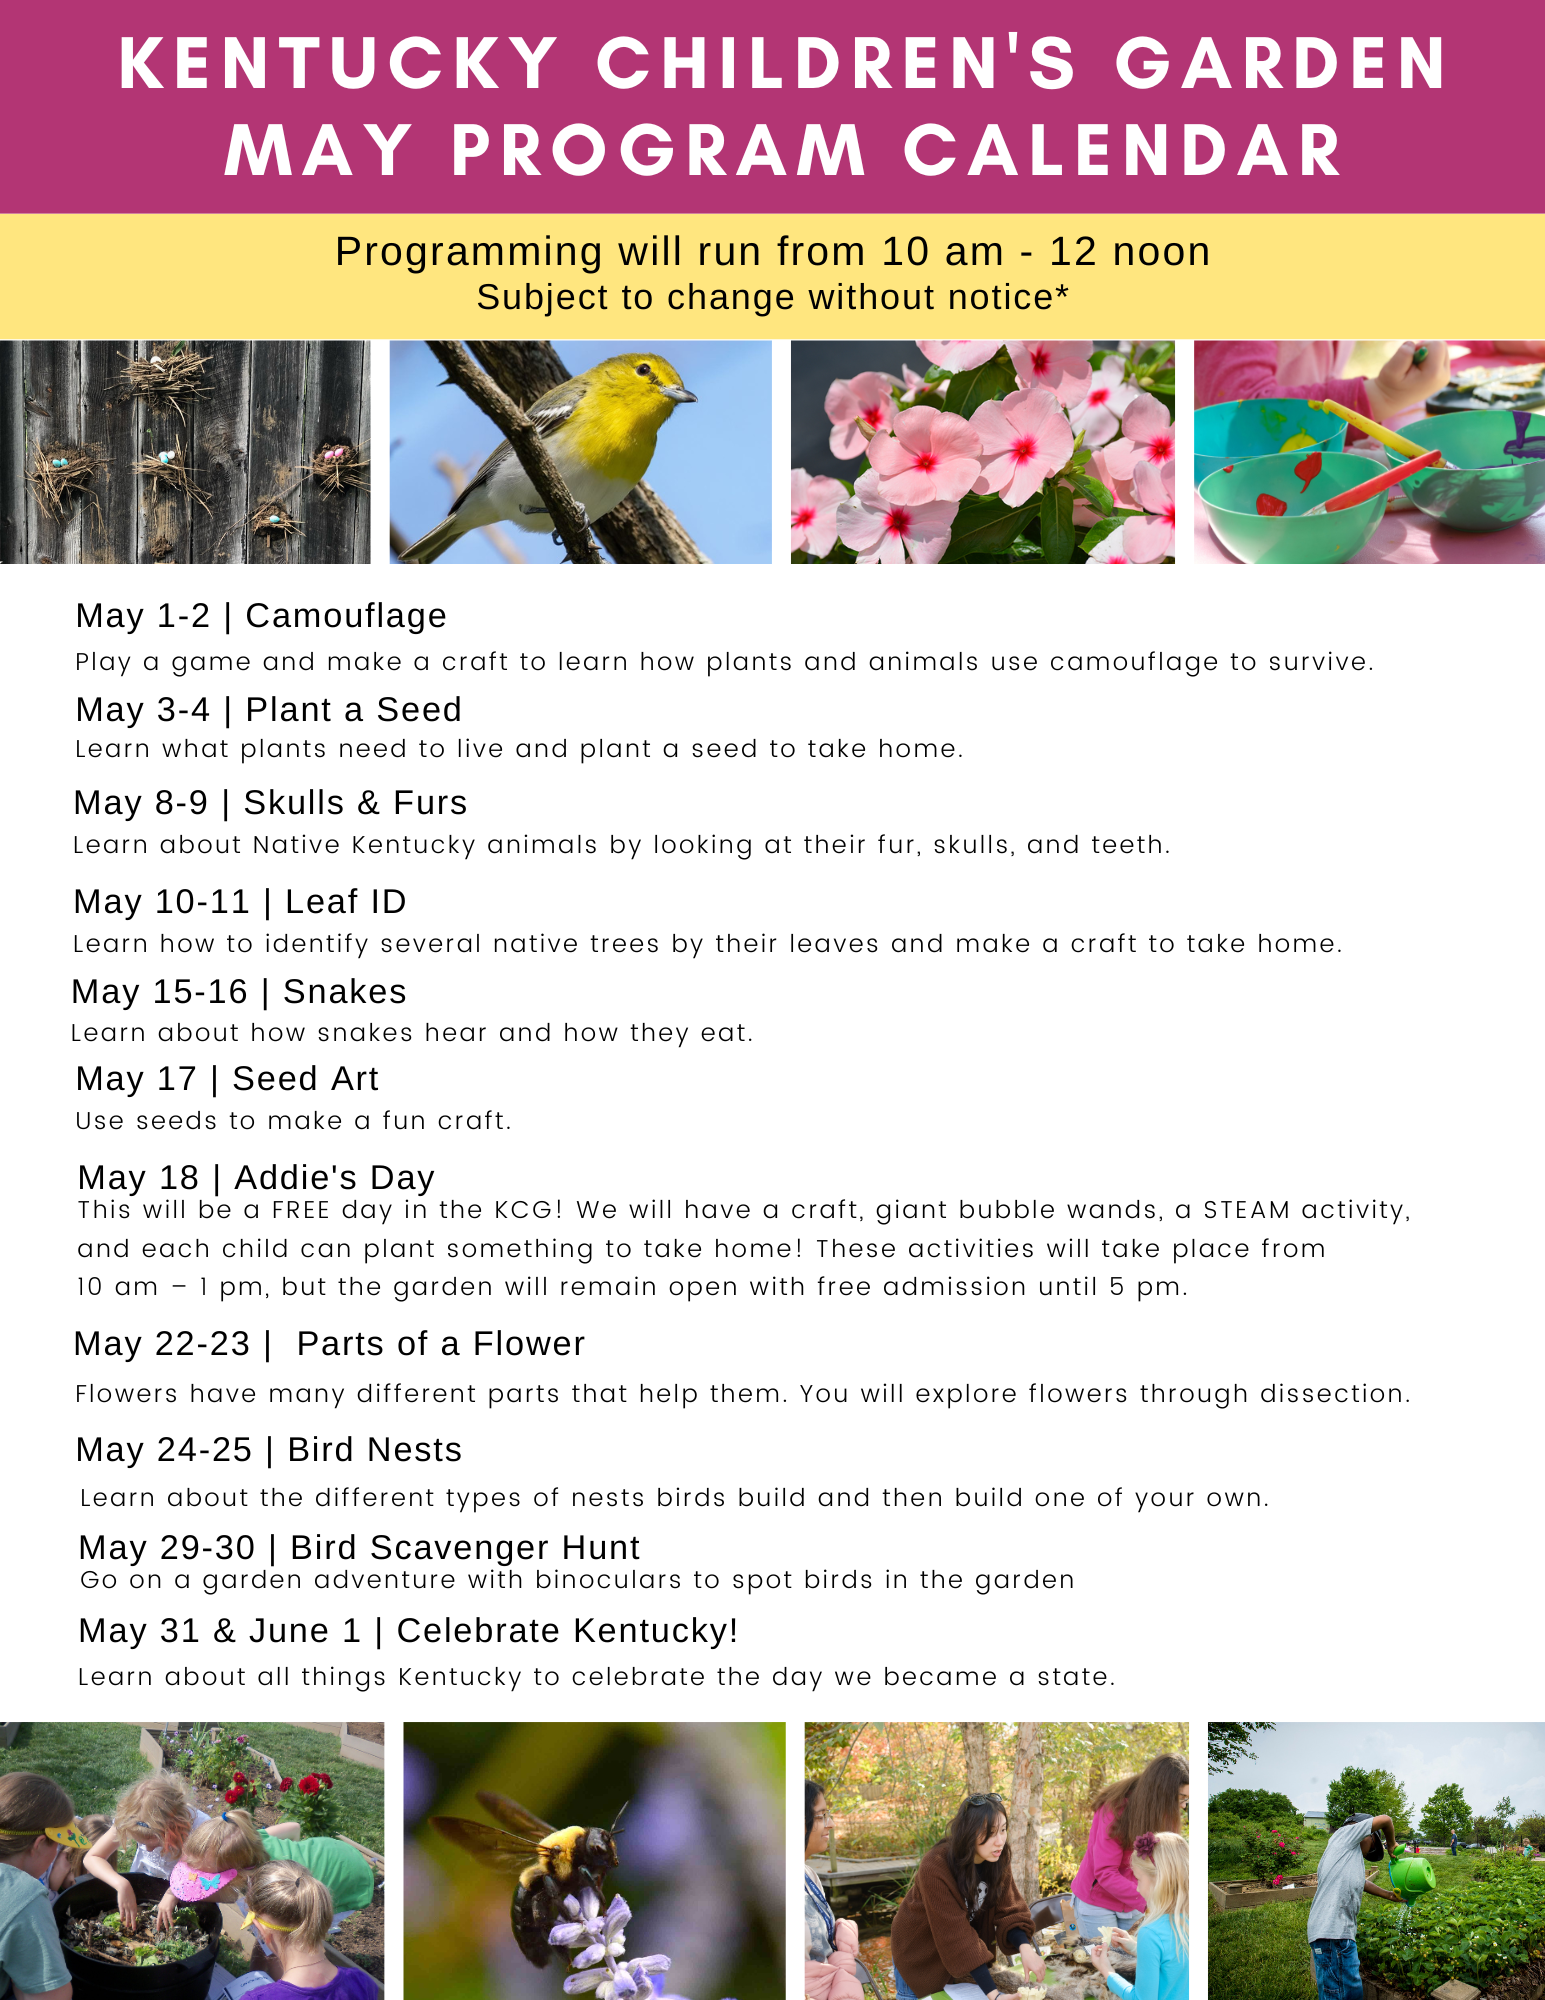 Program Calendar for the KY Children's Garden month of May